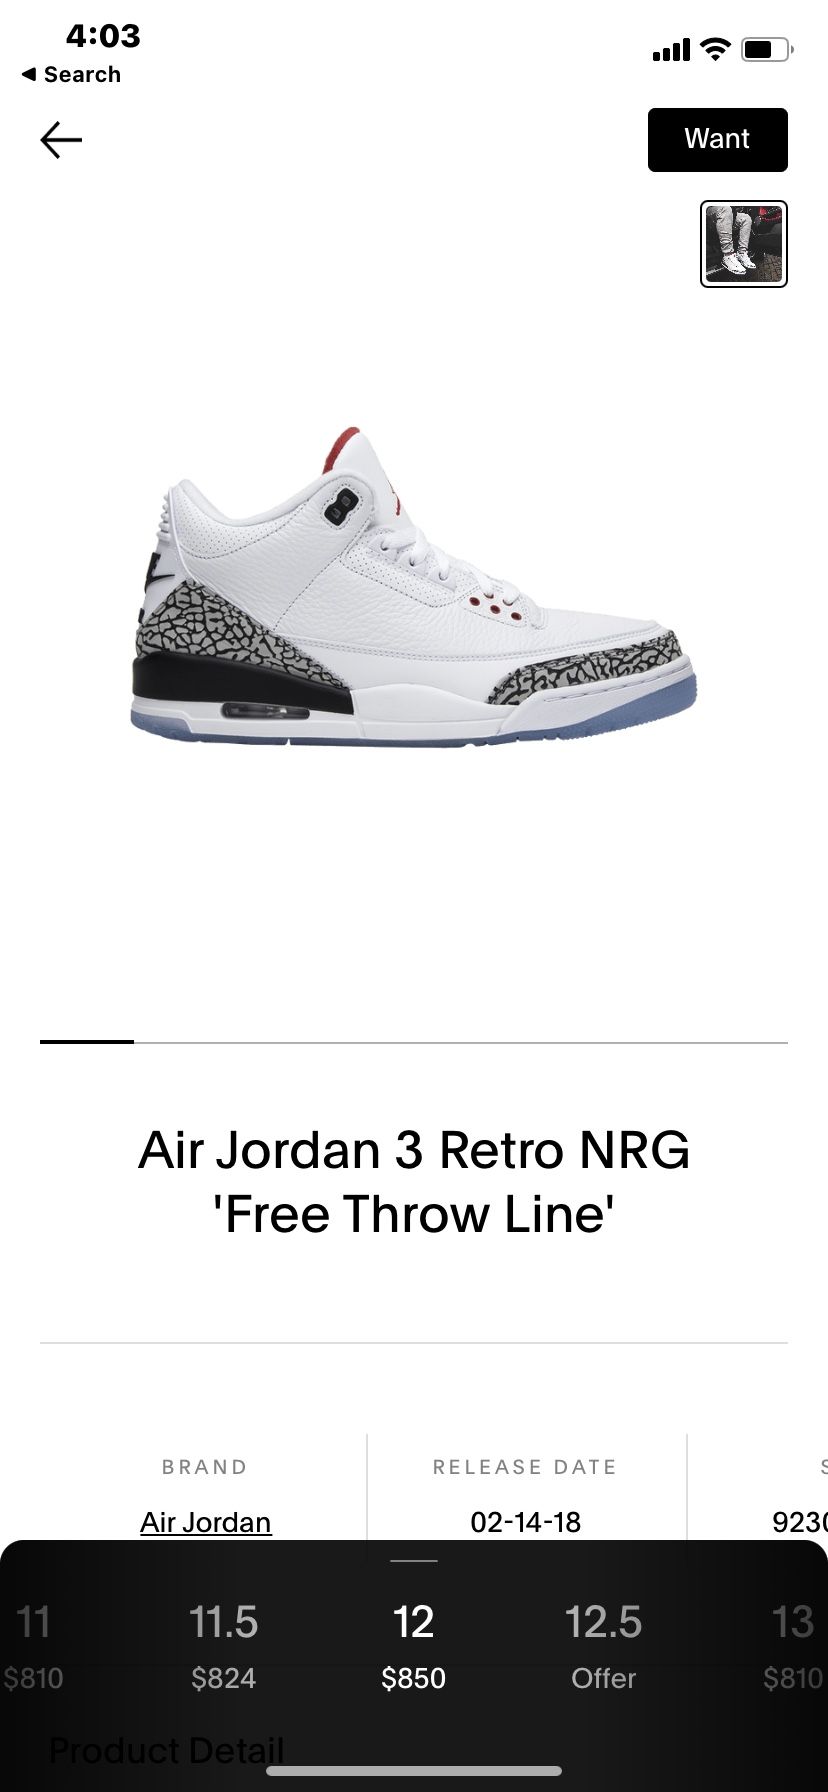 Air Jordan 3 “Free Throw Line”